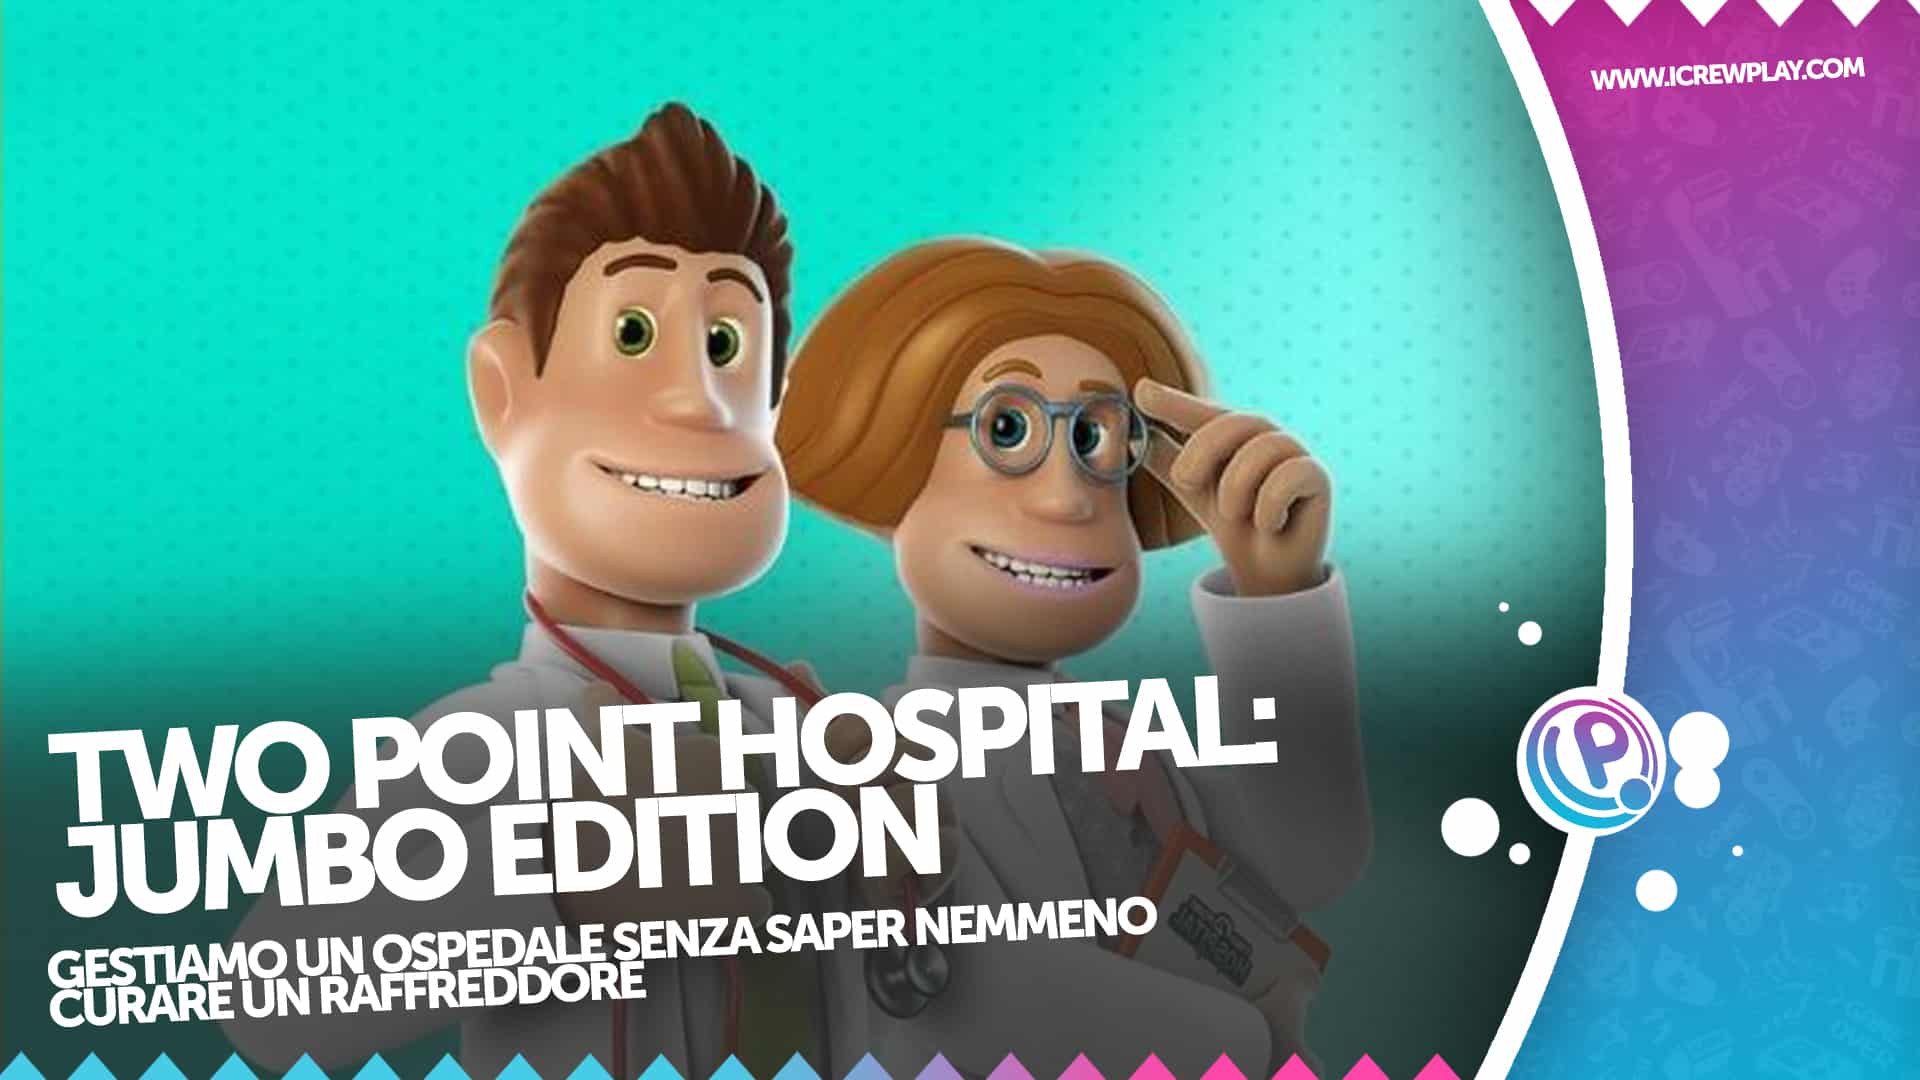 Two Point Hospital: Jumbo Edition la recensione 4